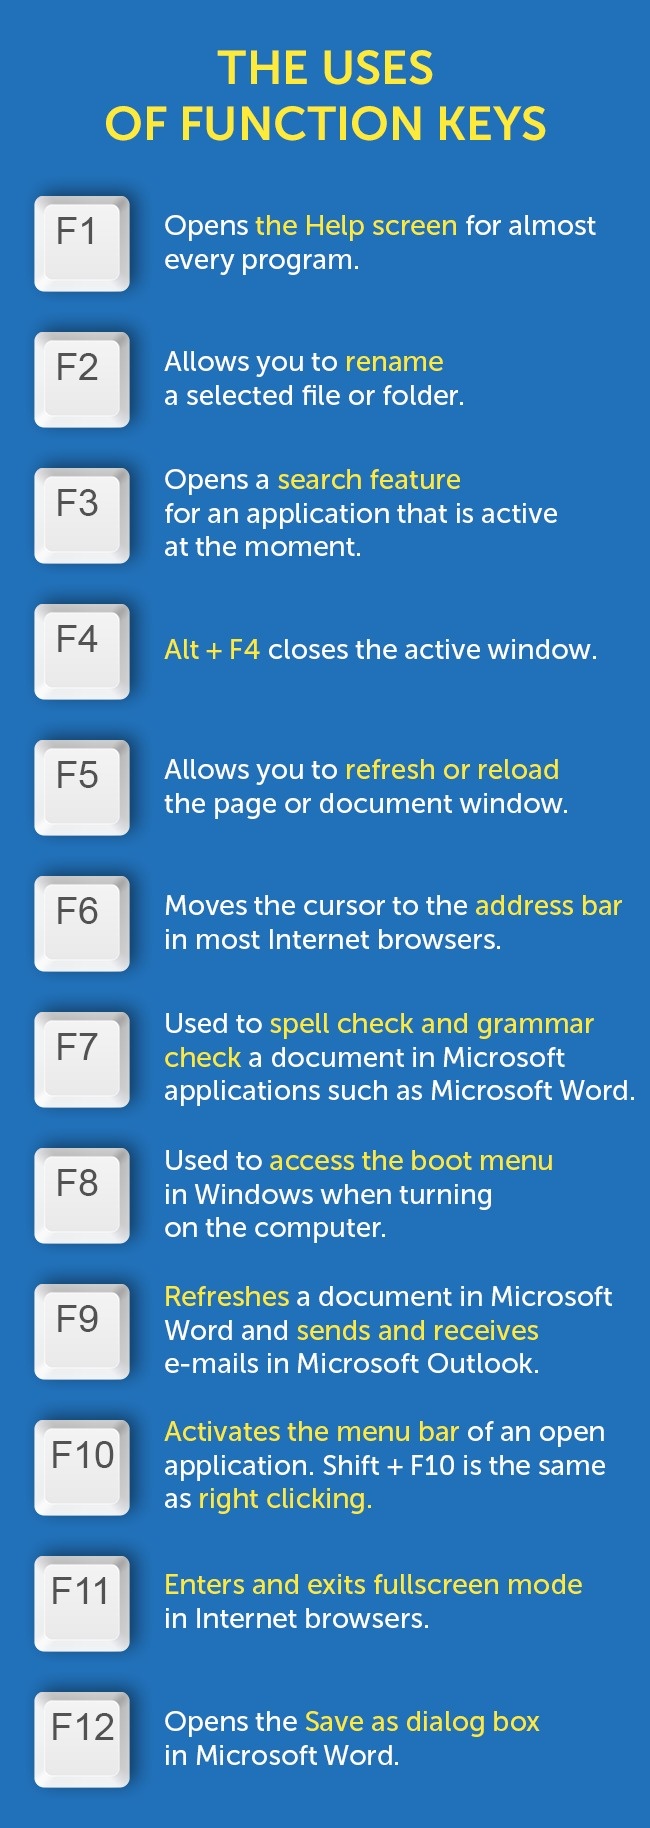 Functions Keys Description